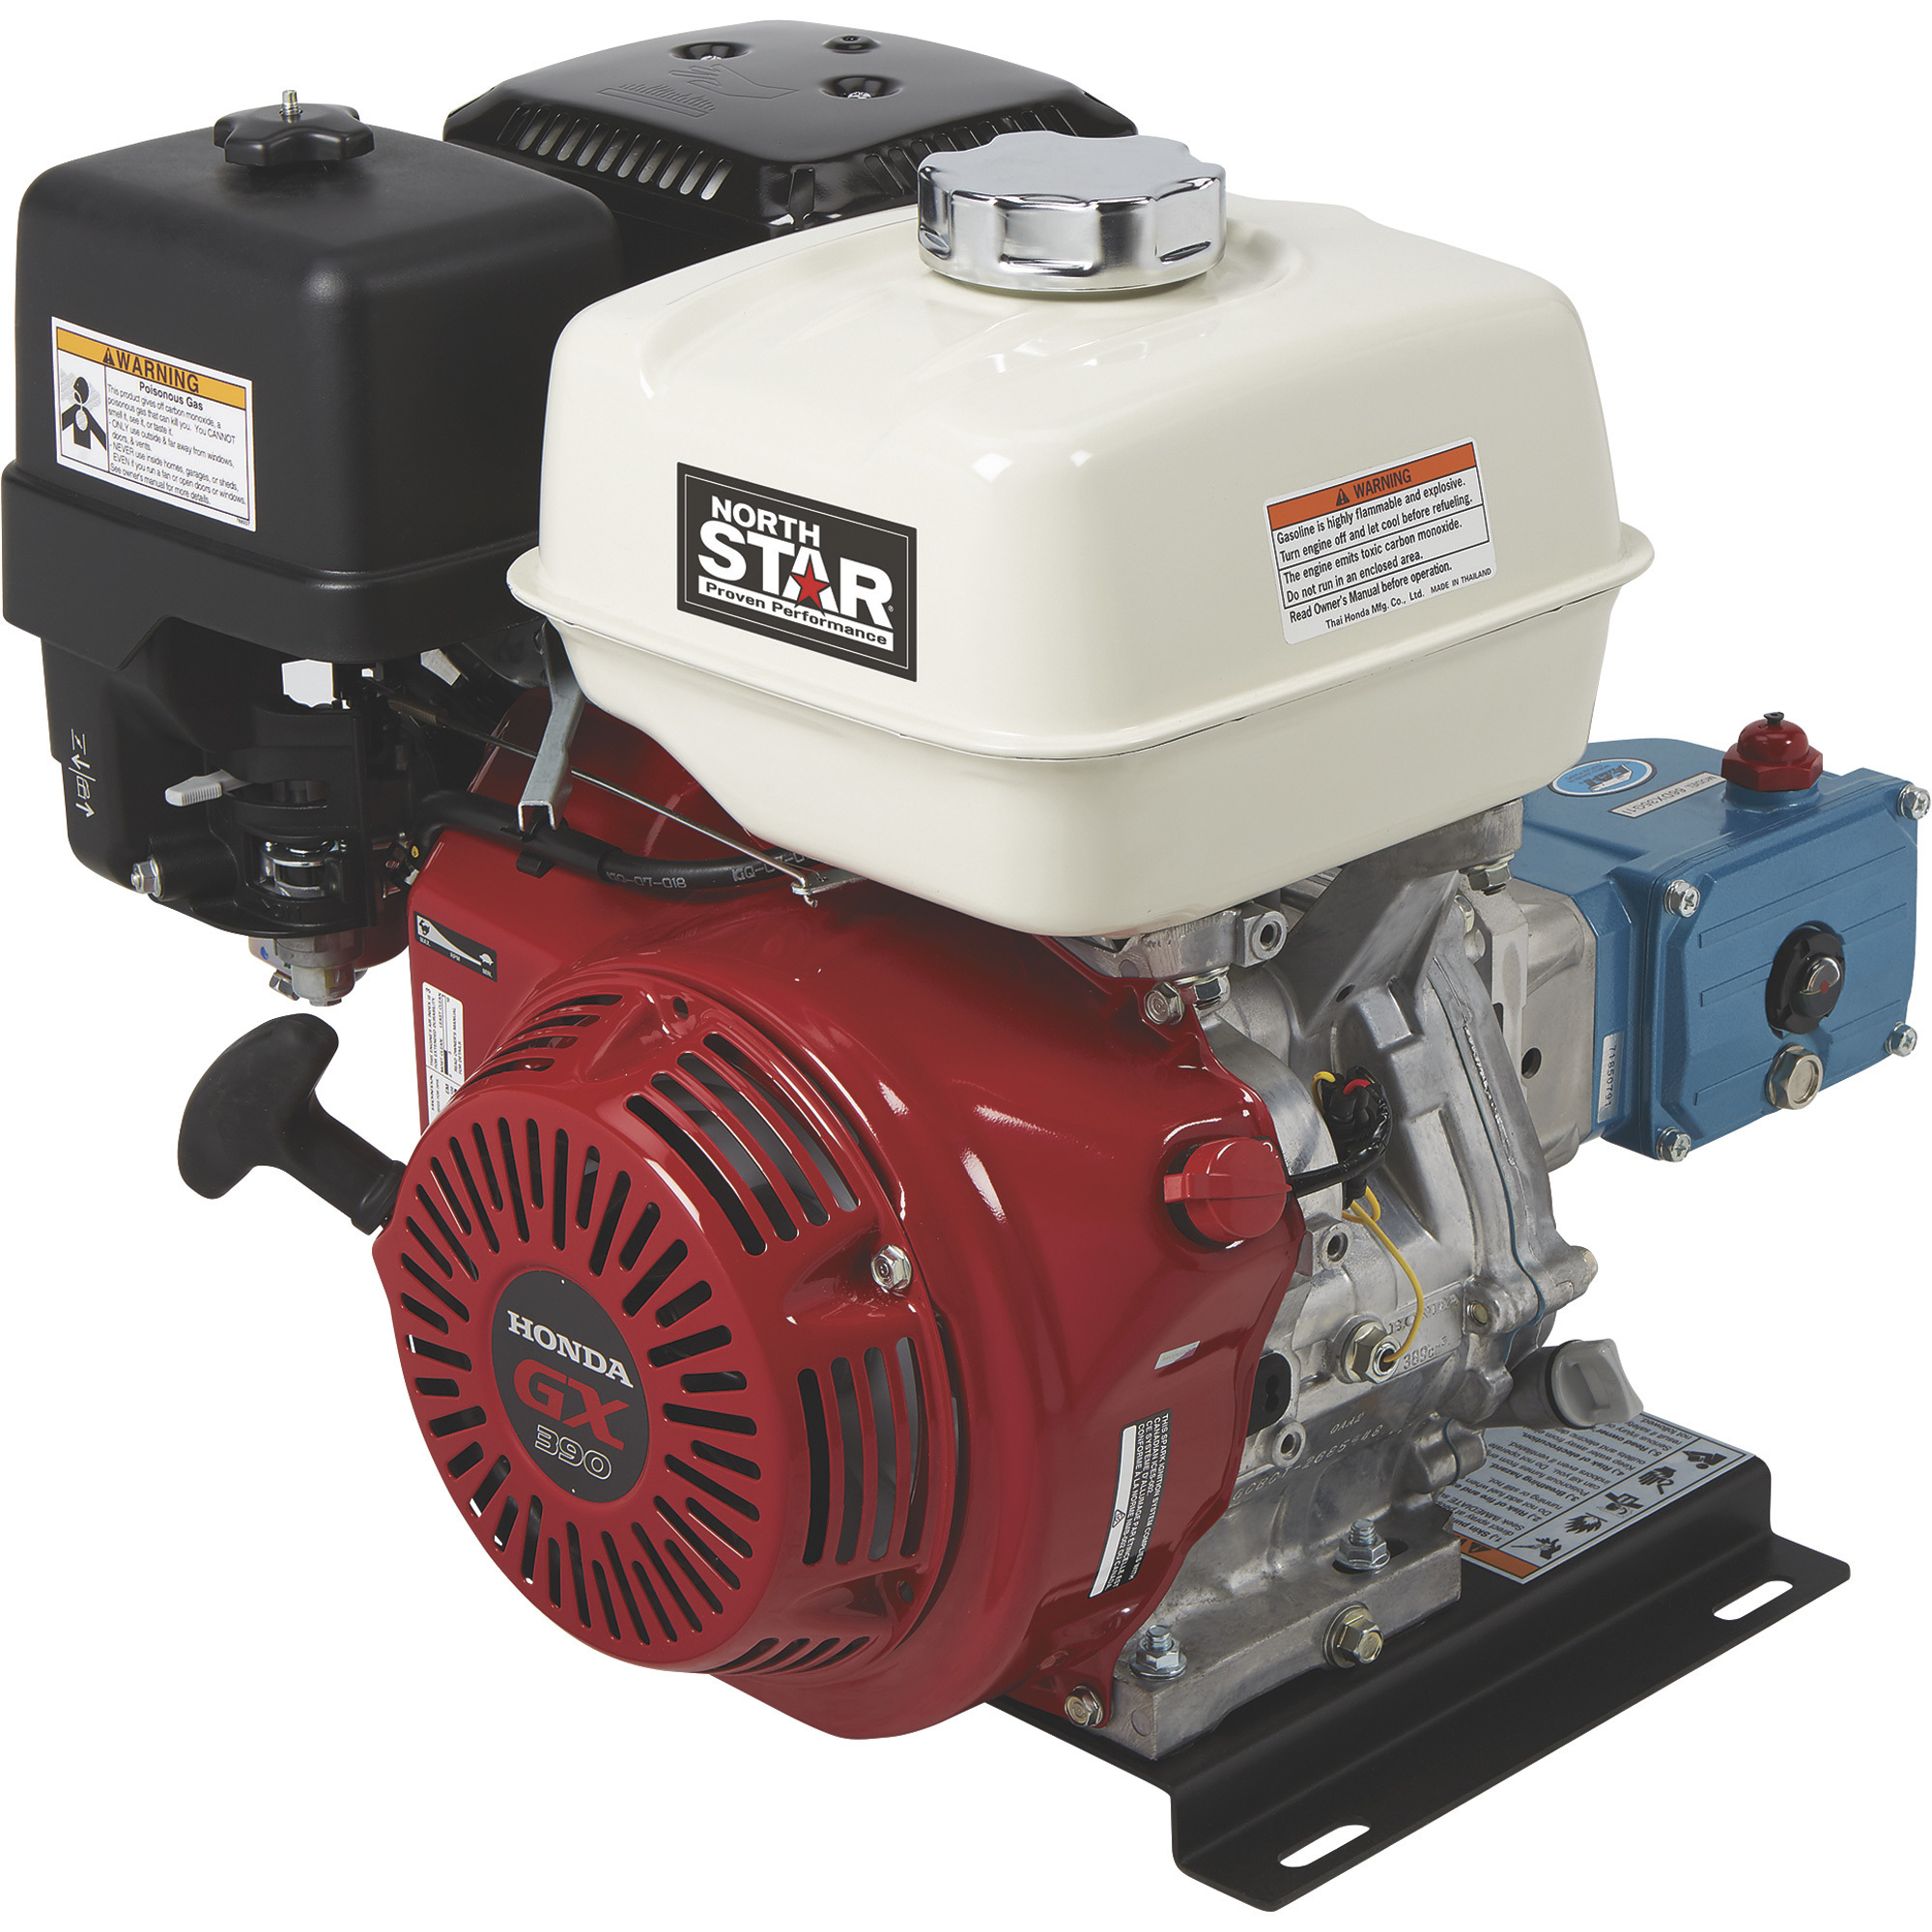 NorthStar Pressure Washer Kit with Honda GX390 Engine, 4200 PSI, 3.5 GPM, CAT 67DX Pump